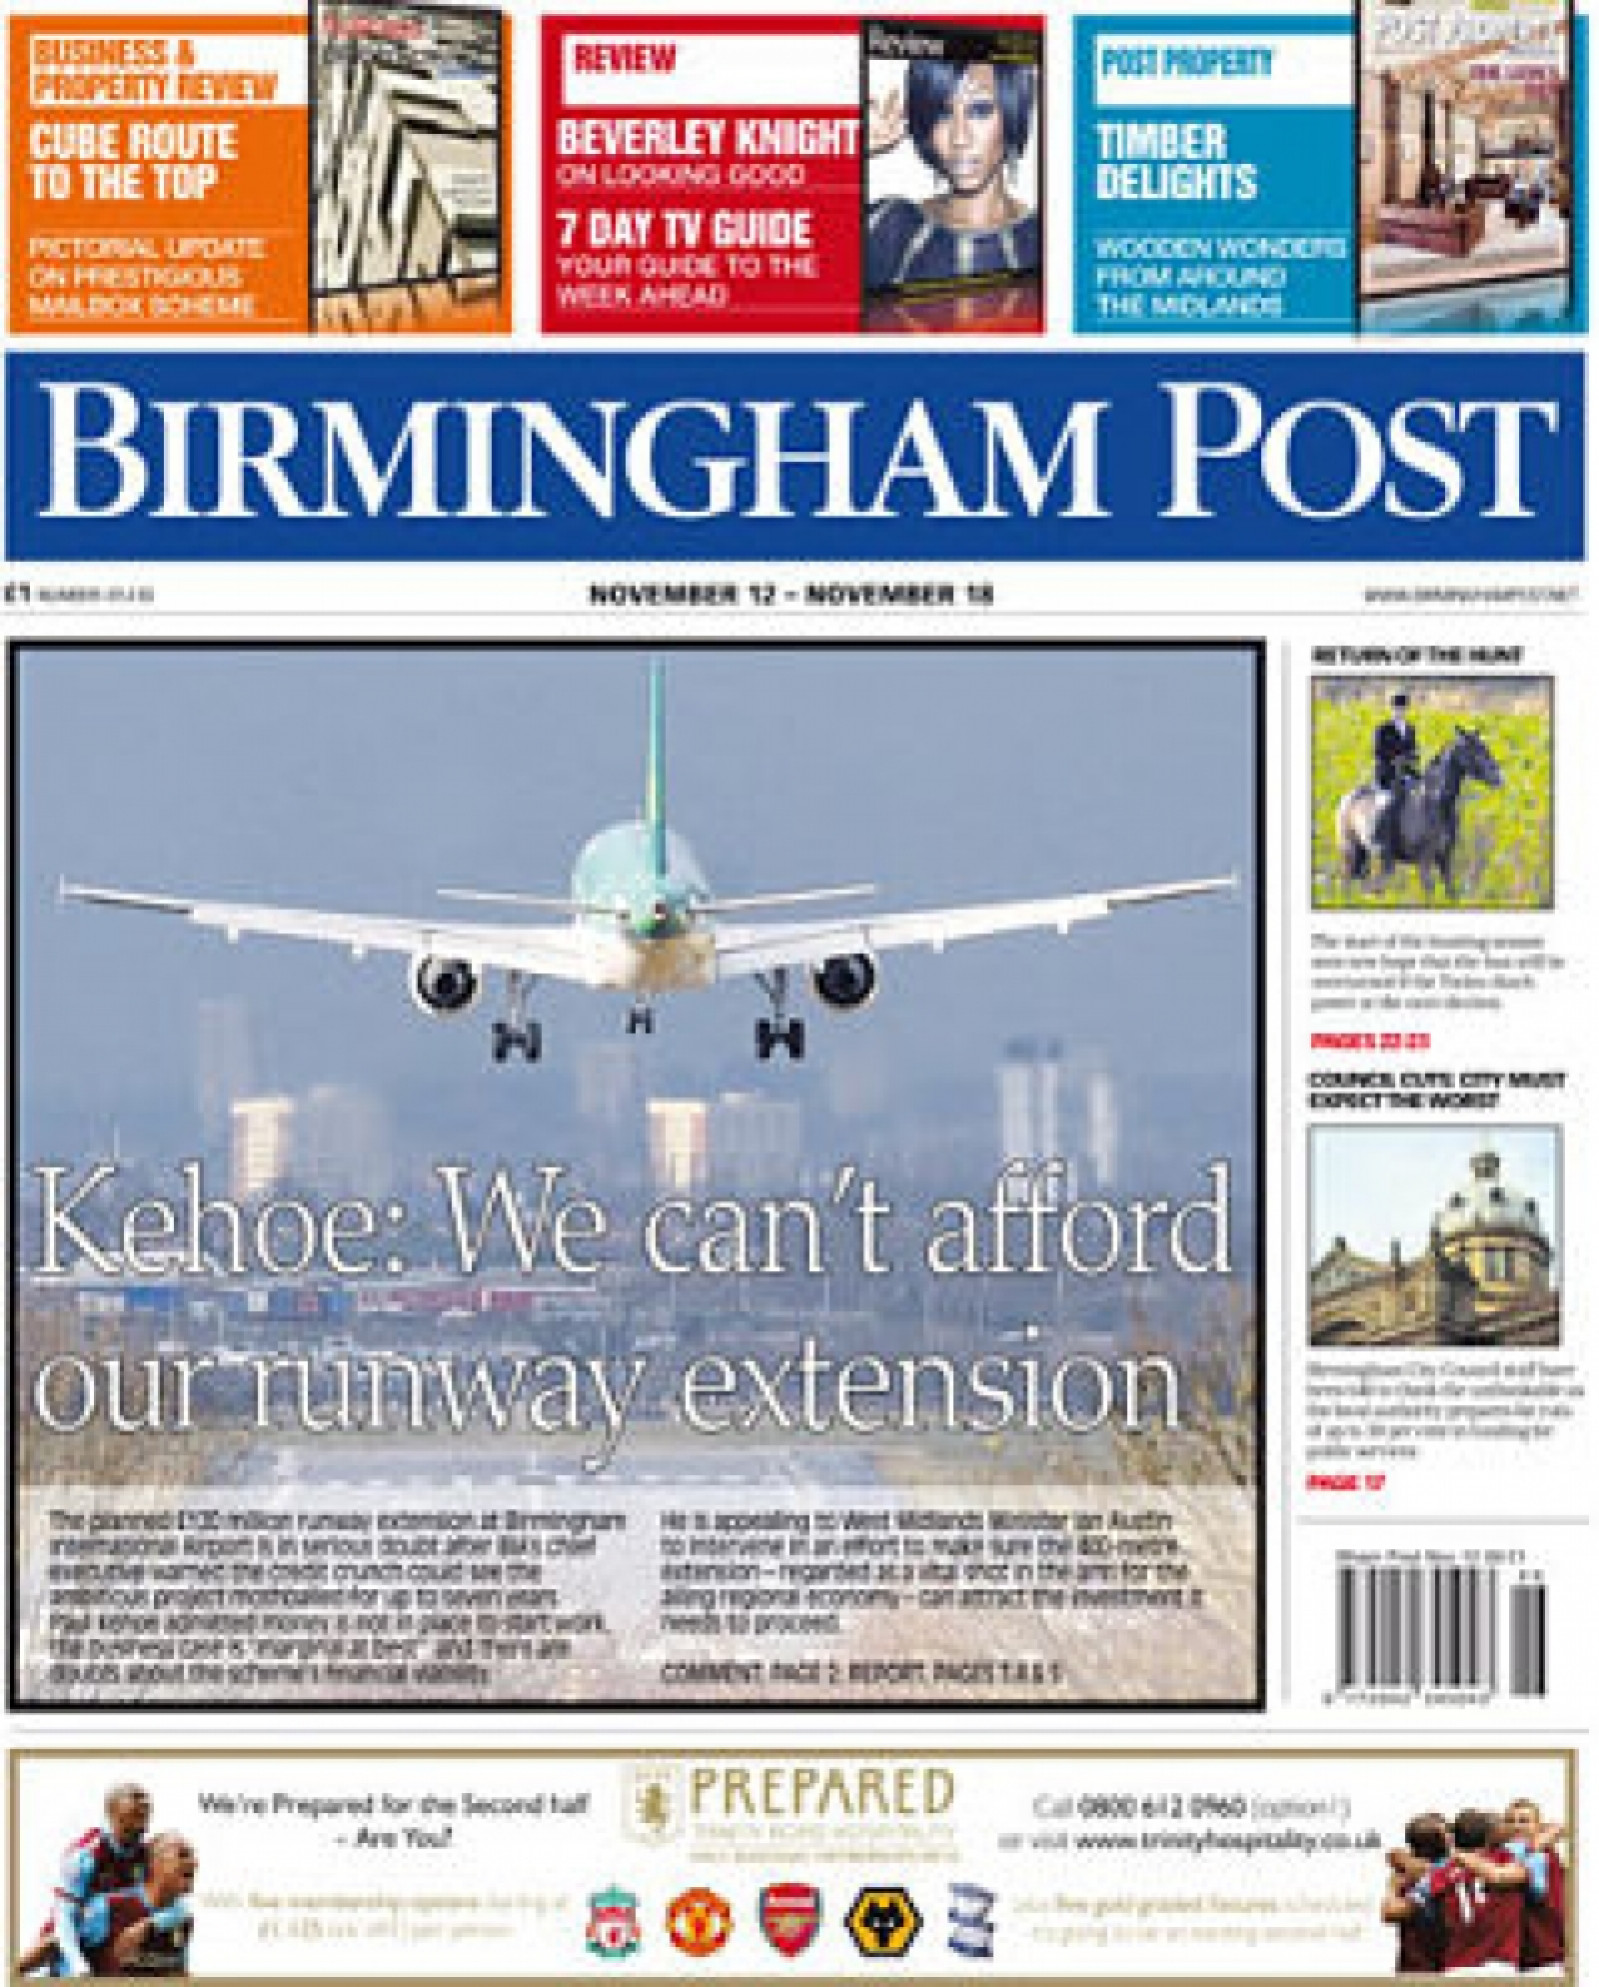 Exclusive offer for MIM Members - Birmingham Post...